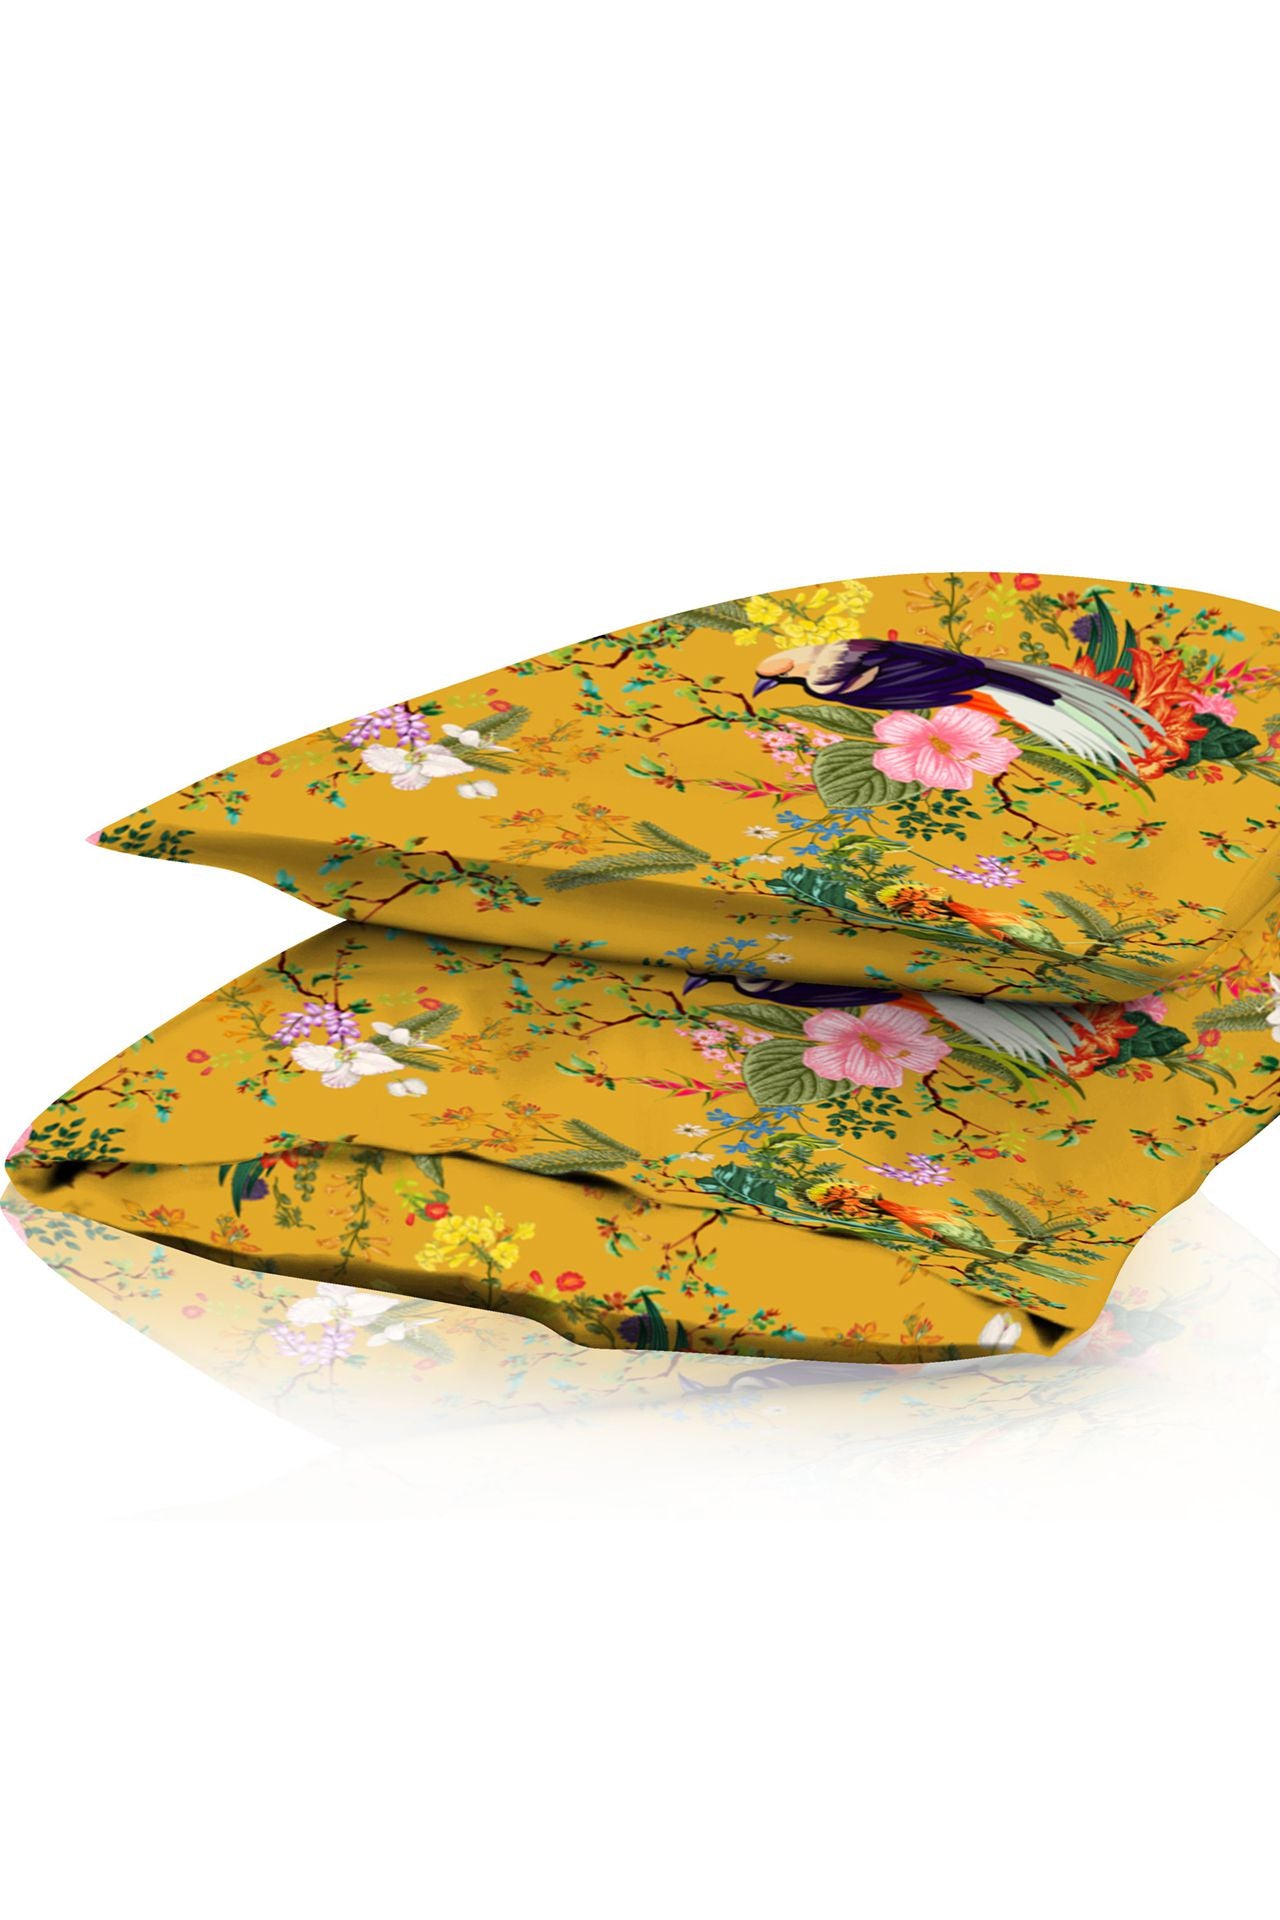 Designer Bird Print Pillow Cover